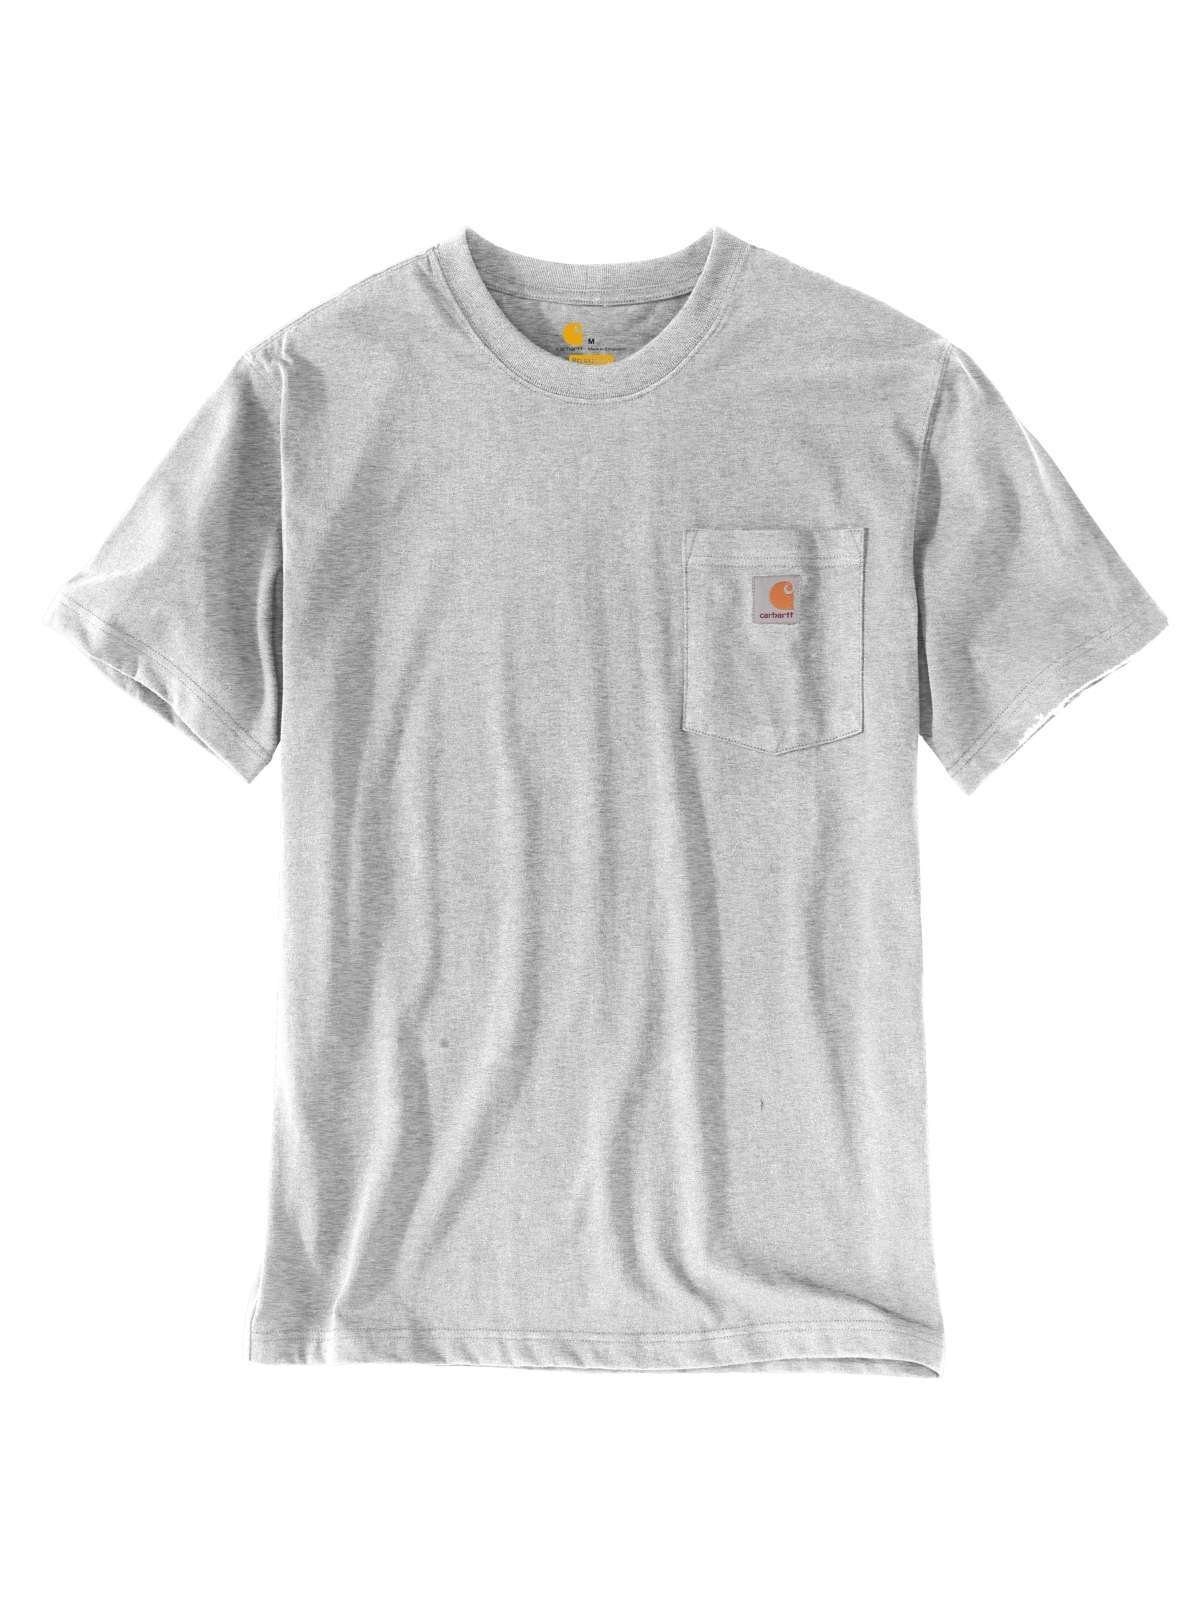 Carhartt Carhartt GREY T-Shirt grau HEATHER T-Shirt